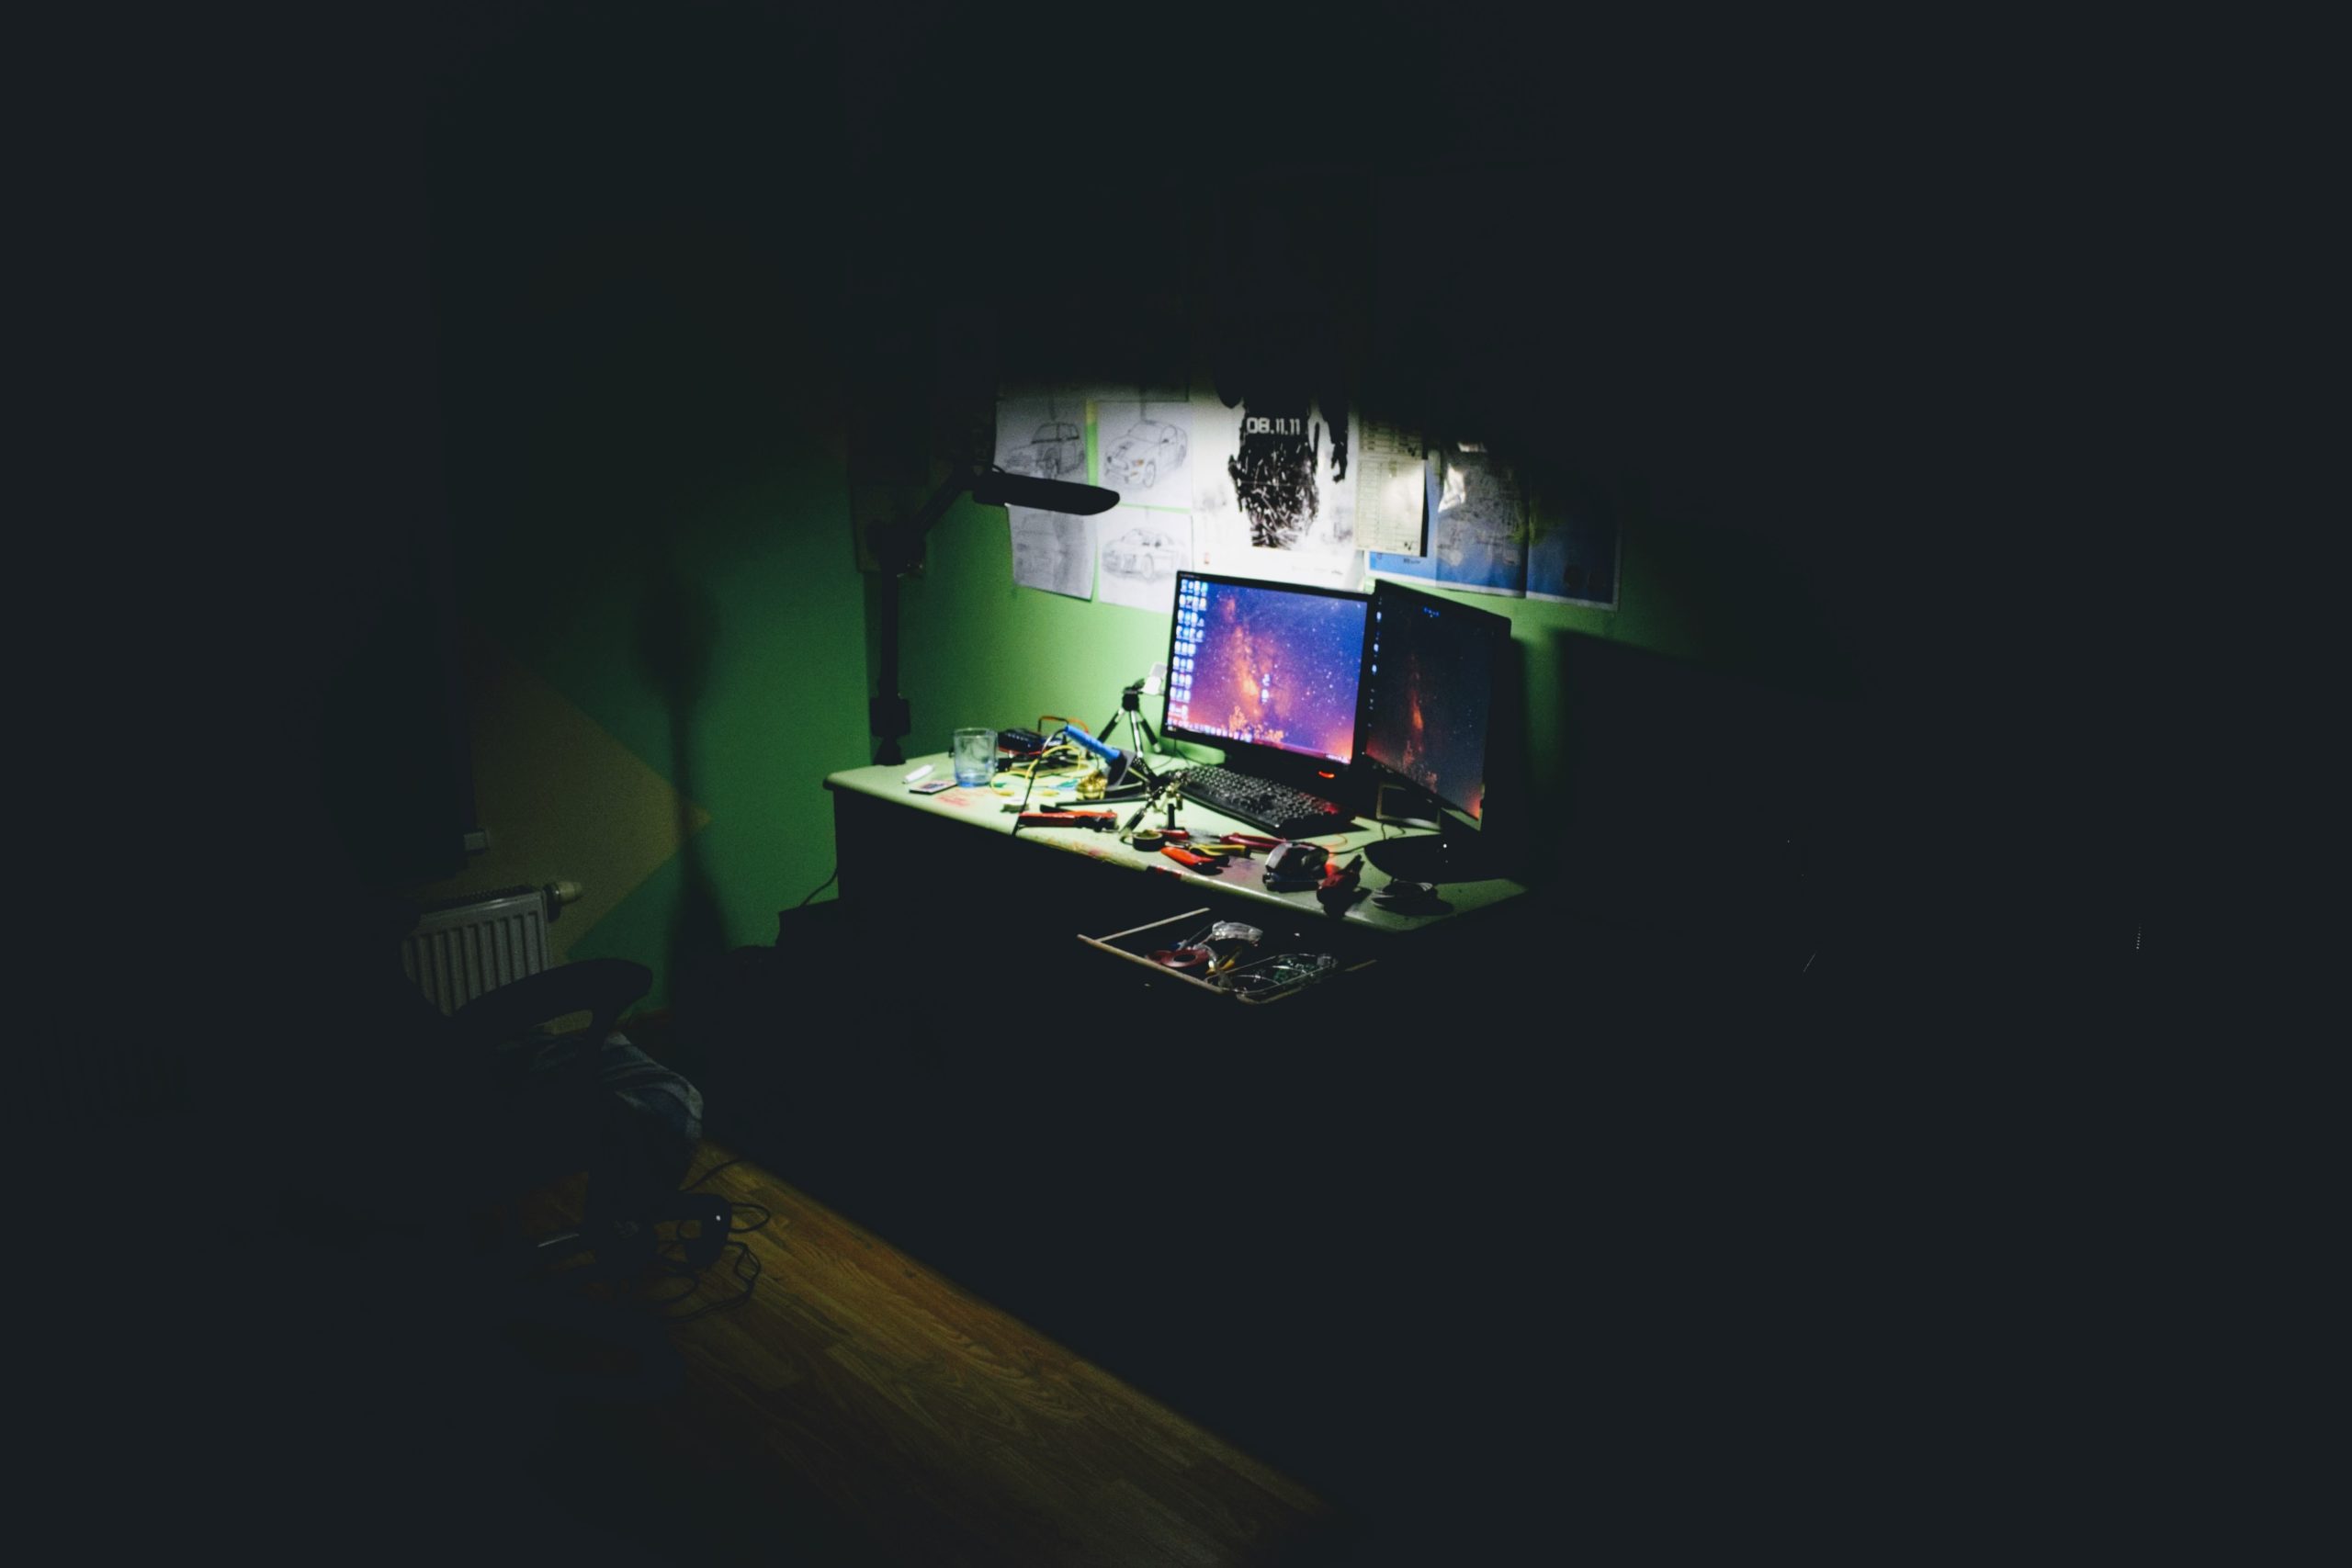 A desktop computer in a dark bedroom